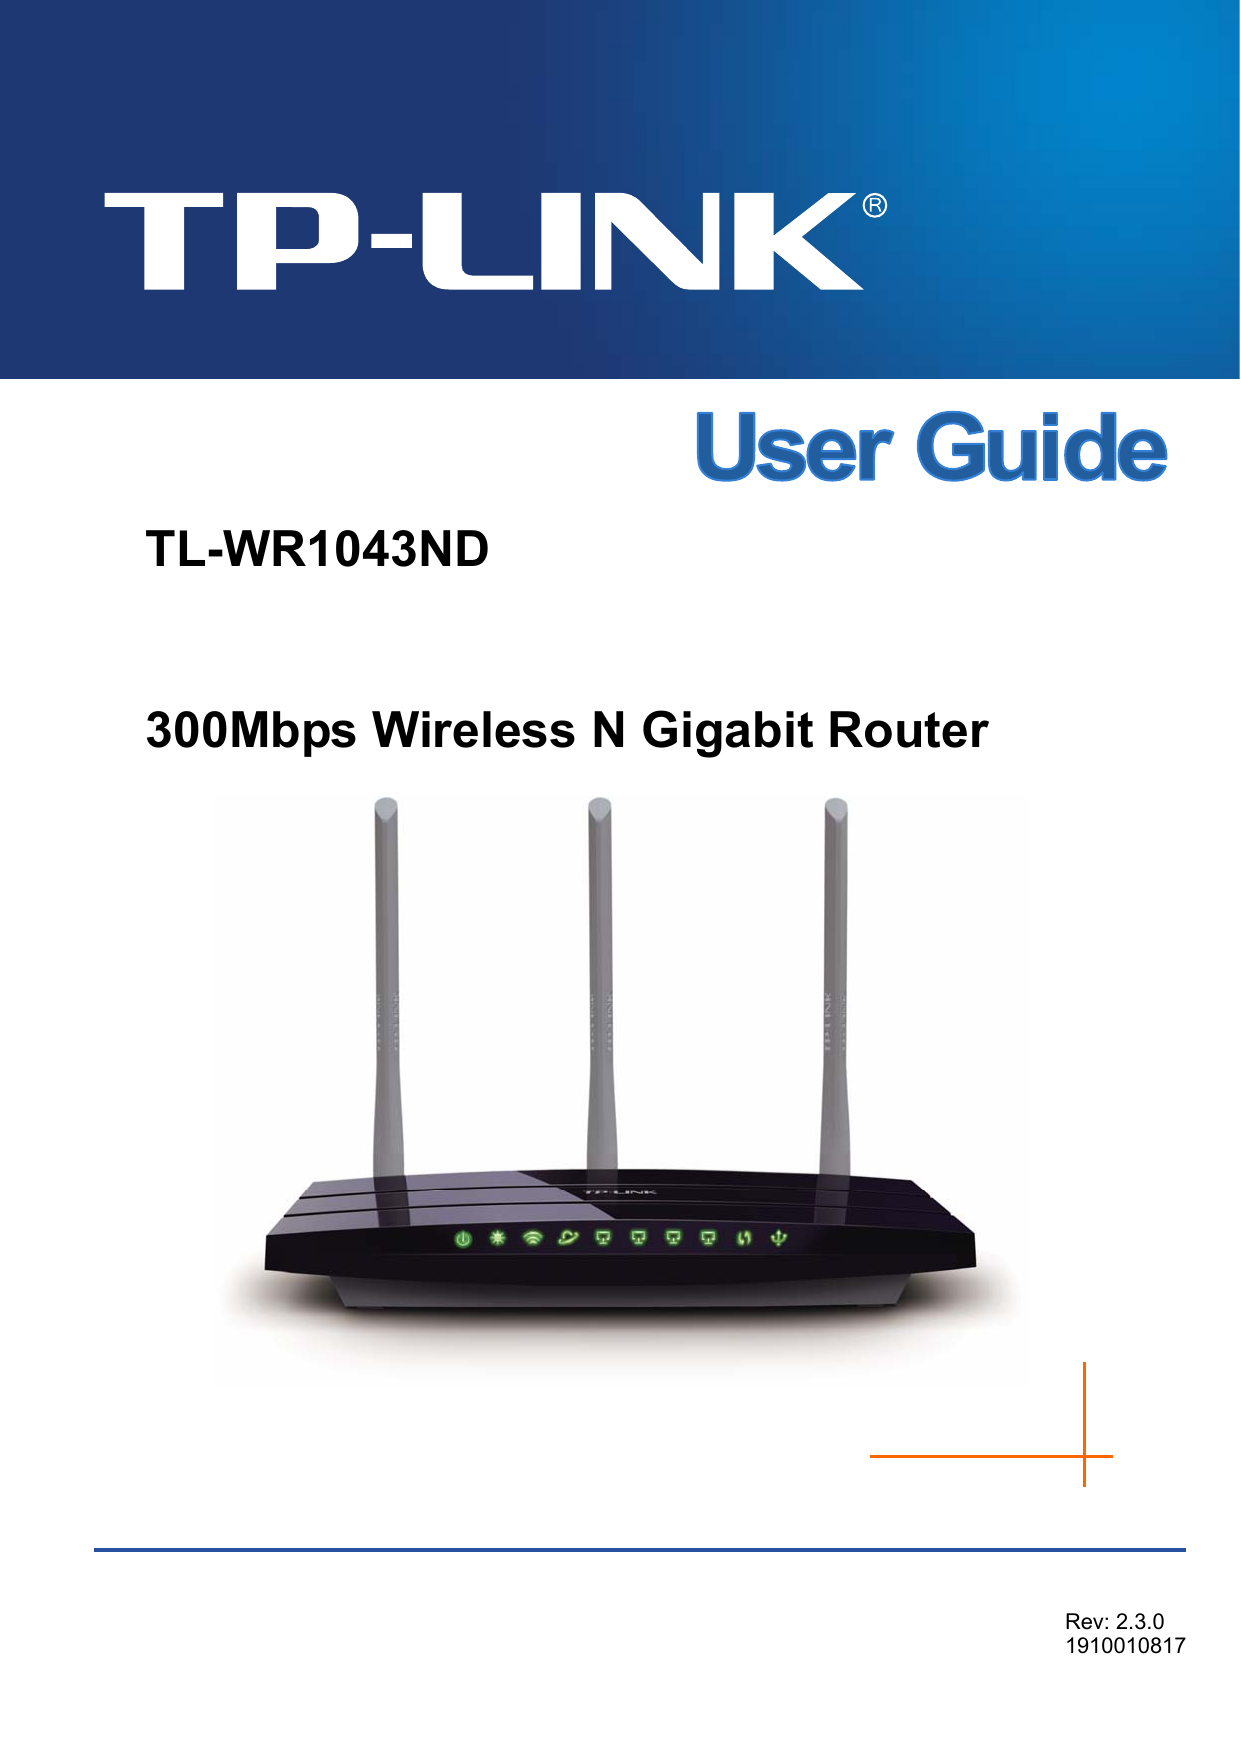   TL-WR1043ND  300Mbps Wireless N Gigabit Router   Rev: 2.3.0 1910010817   